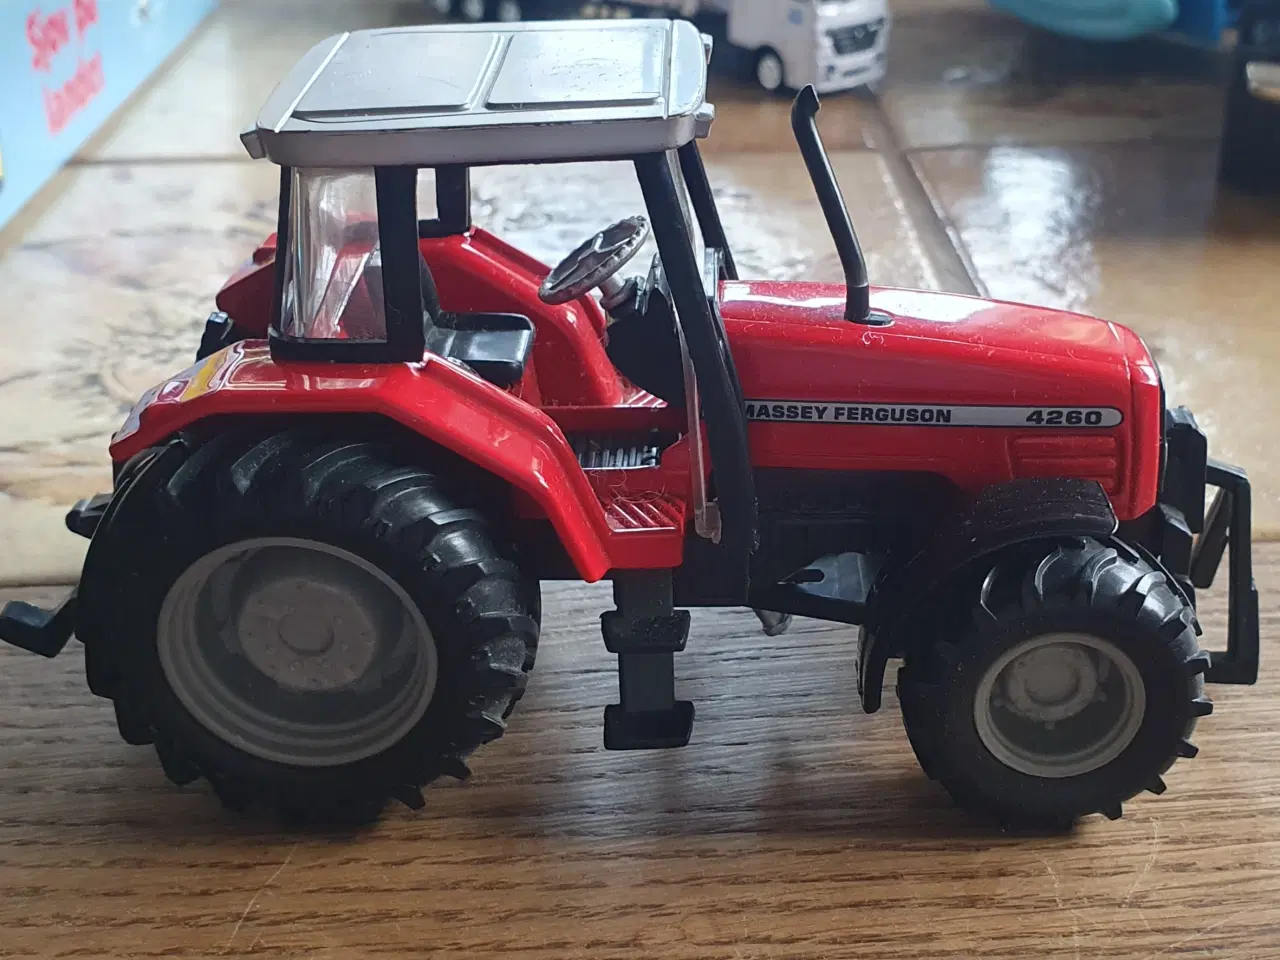 Billede 2 - Rød traktor